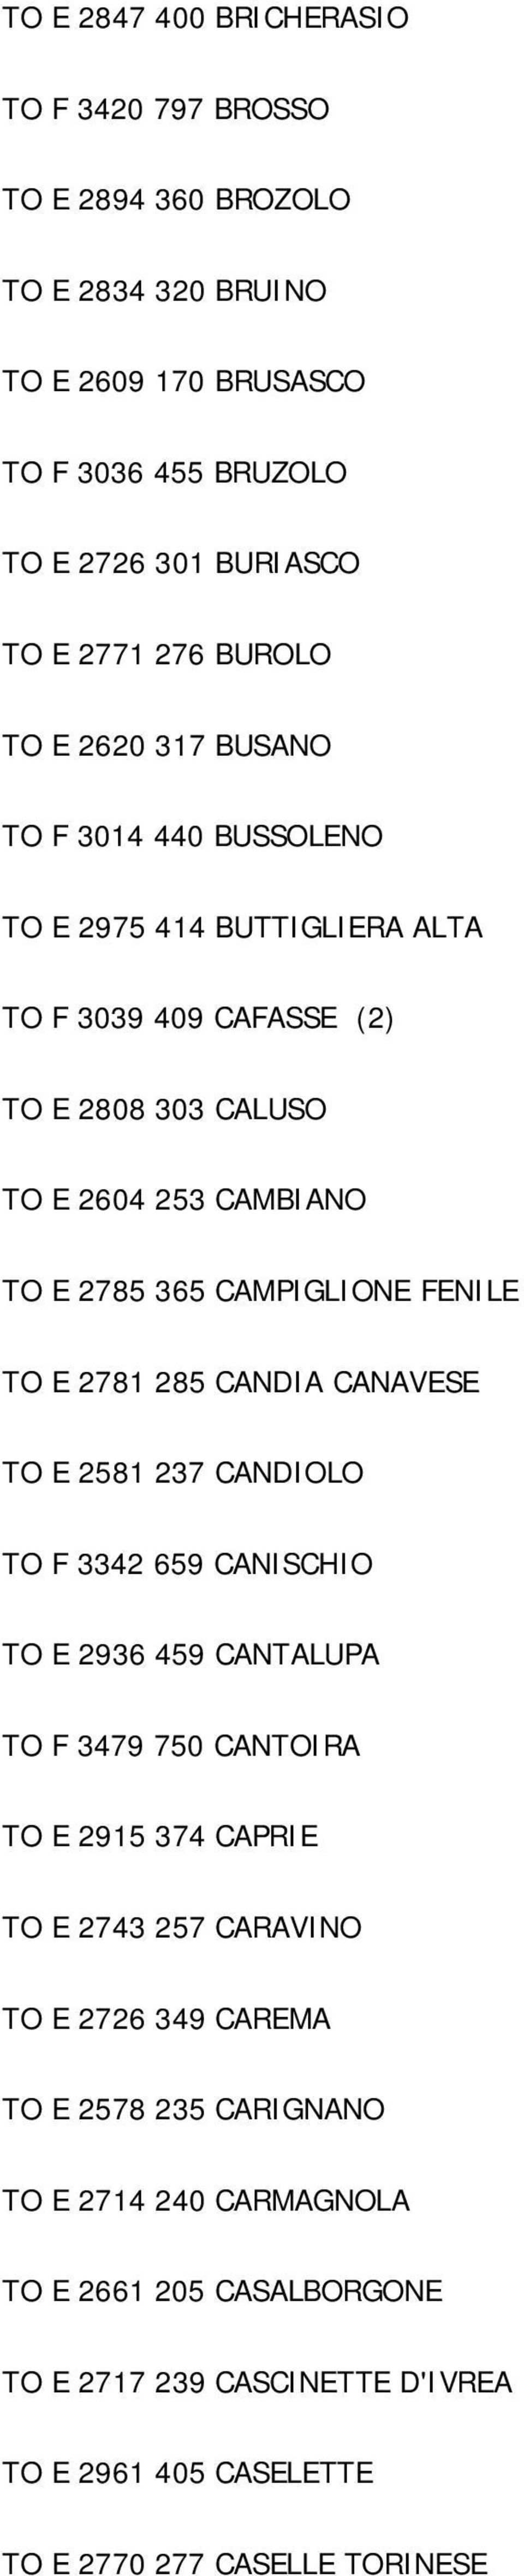 CAMPIGLIONE FENILE TO E 2781 285 CANDIA CANAVESE TO E 2581 237 CANDIOLO TO F 3342 659 CANISCHIO TO E 2936 459 CANTALUPA TO F 3479 750 CANTOIRA TO E 2915 374 CAPRIE TO E 2743 257